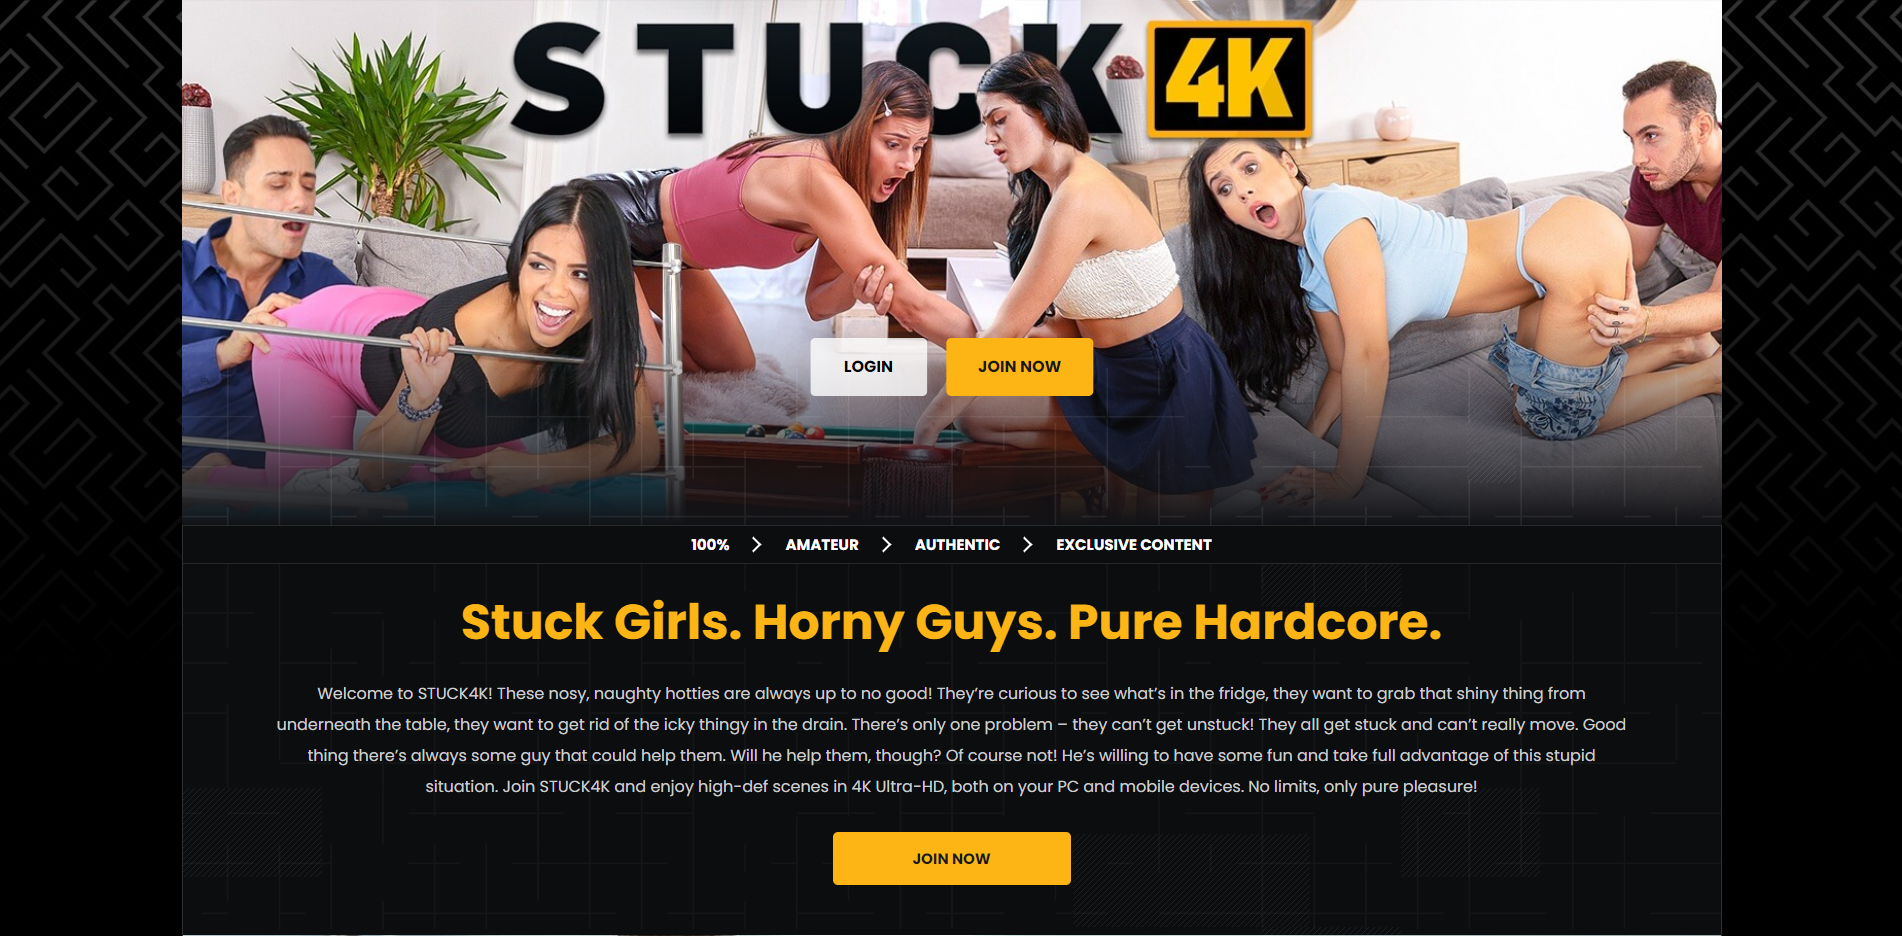 Stuck 4k Review Image